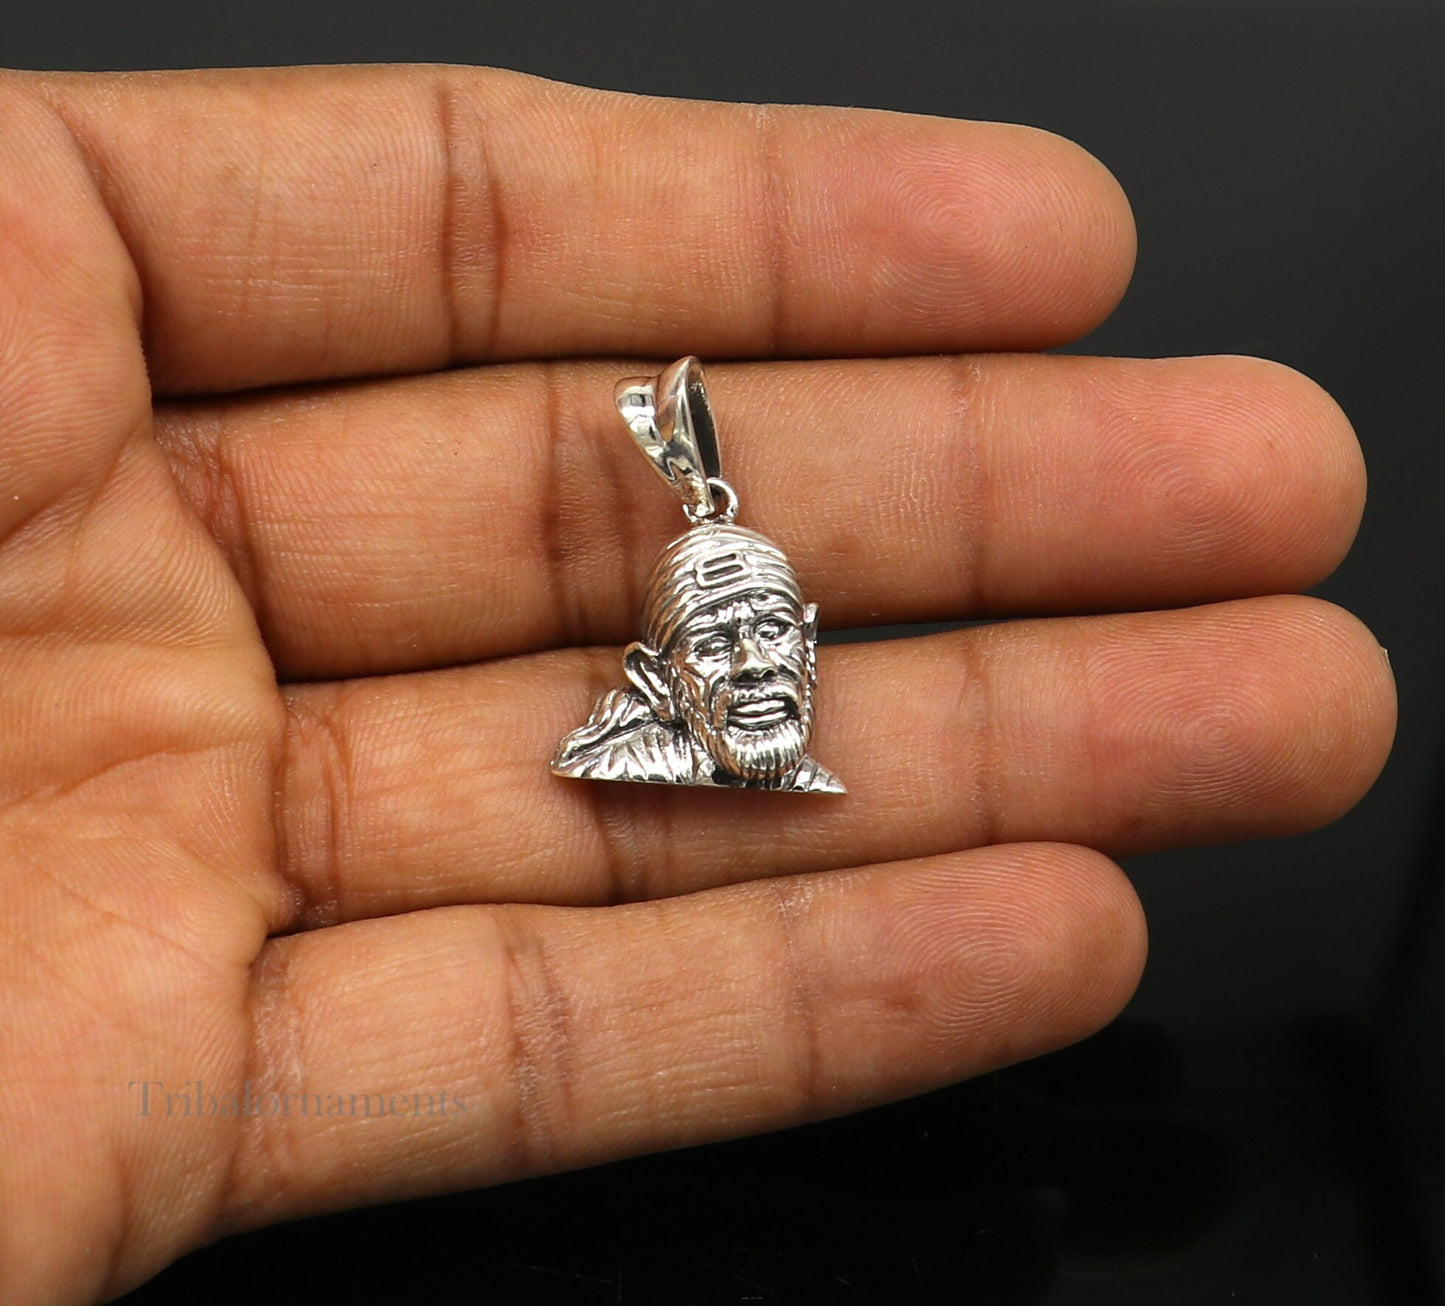 Idol Sai Baba pendant 925 sterling silver handmade amazing stylish unisex pendant locket personalized jewelry tribal jewelry ssp901 - TRIBAL ORNAMENTS